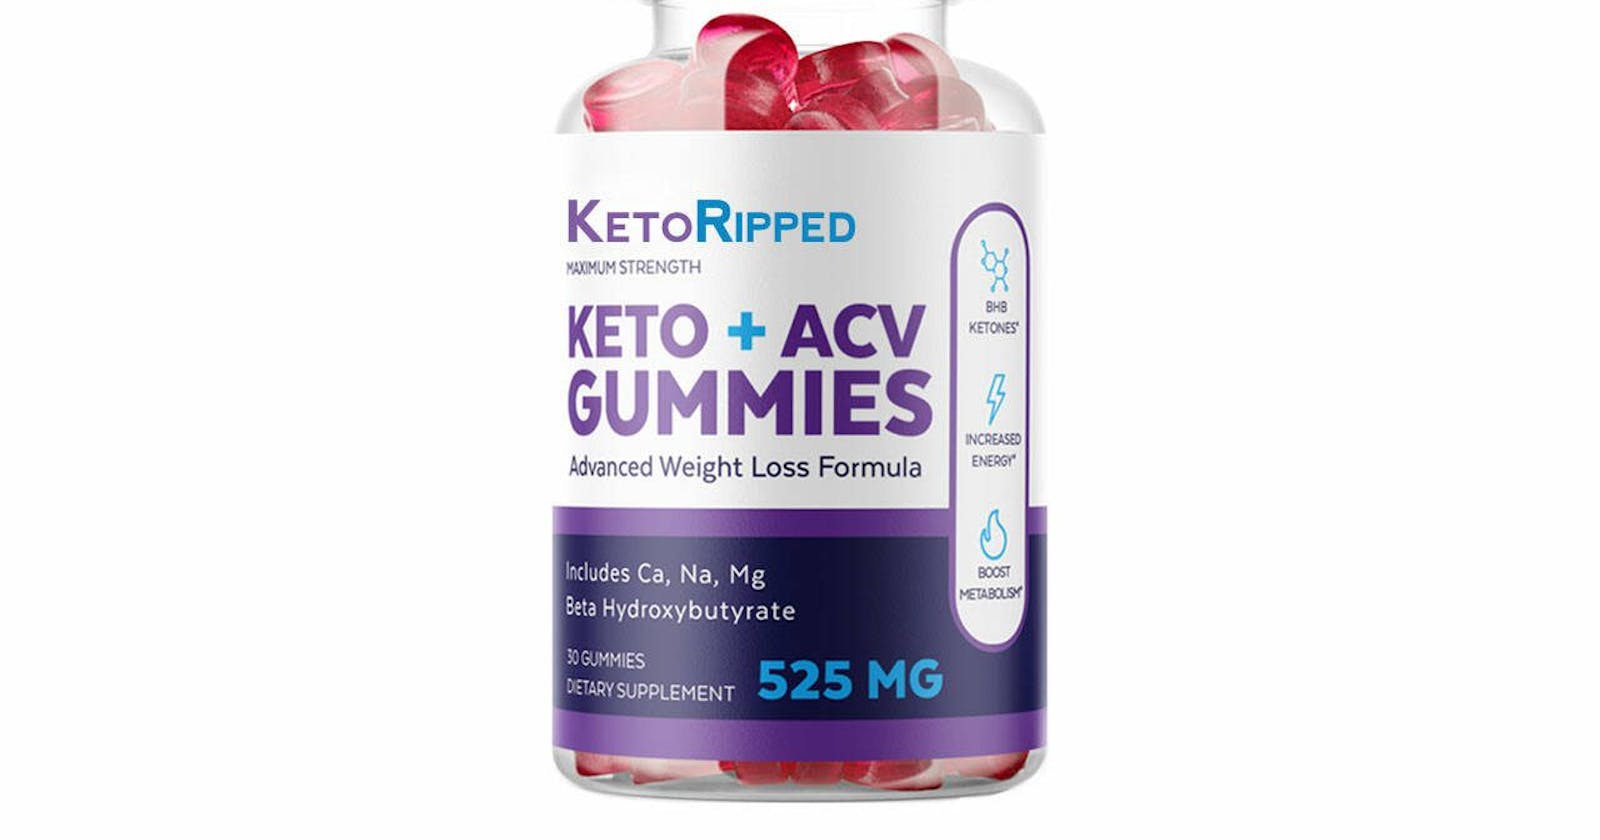 Keto Ripped Keto ACV Gummies Review - Scam Brand or Safe TruBio Keto Weight Loss Gummy?